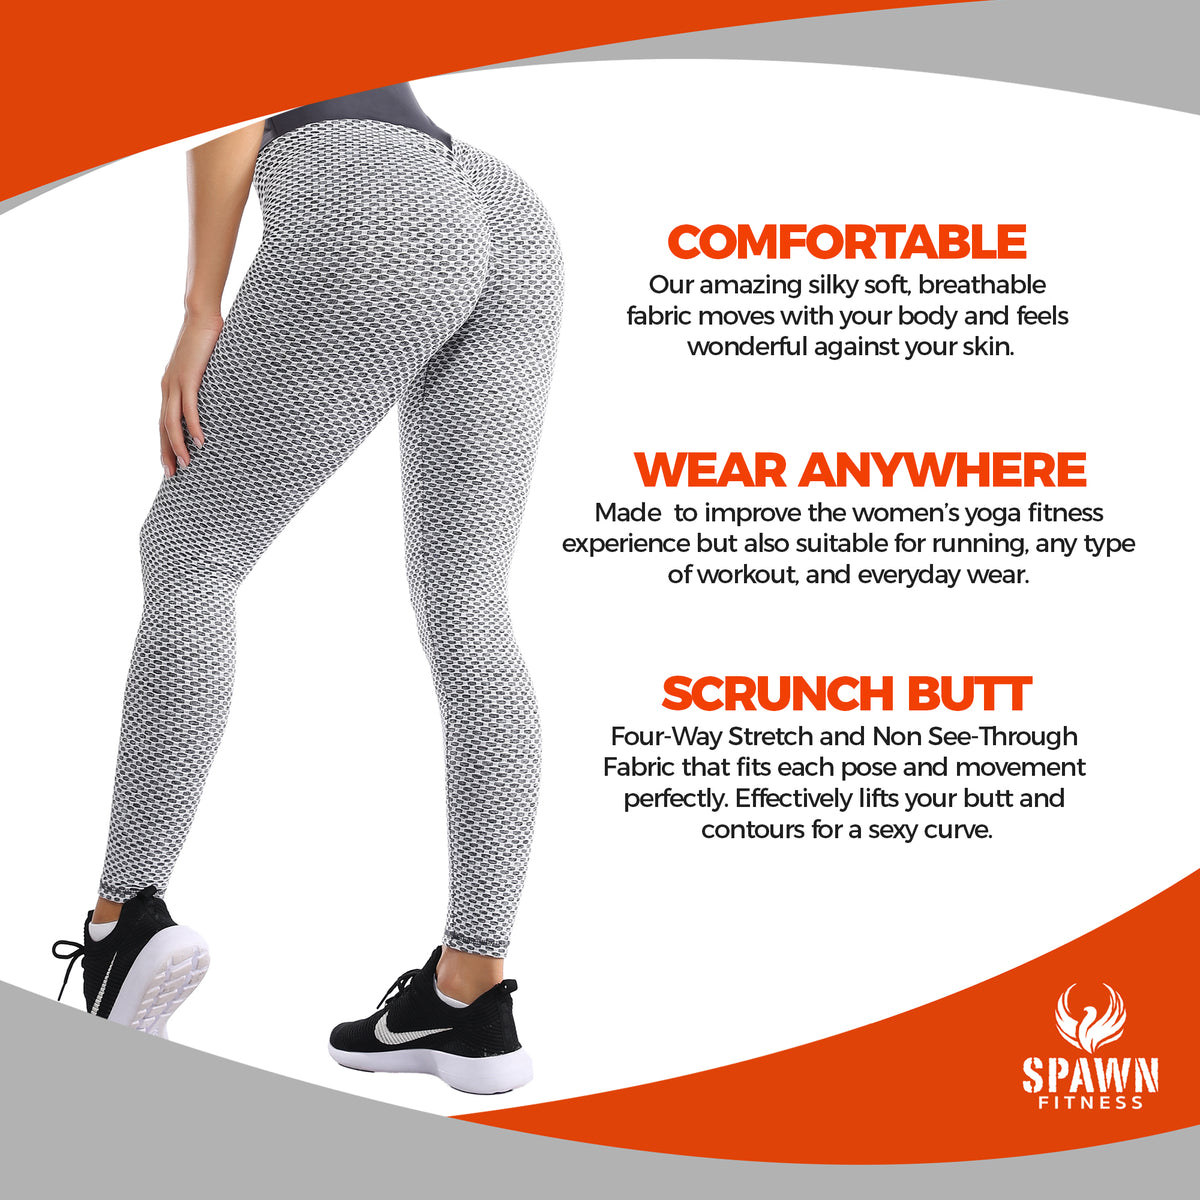 Spawn Fitness Yoga Pants TikTok Leggings for Women Butt Lifting Gray XS